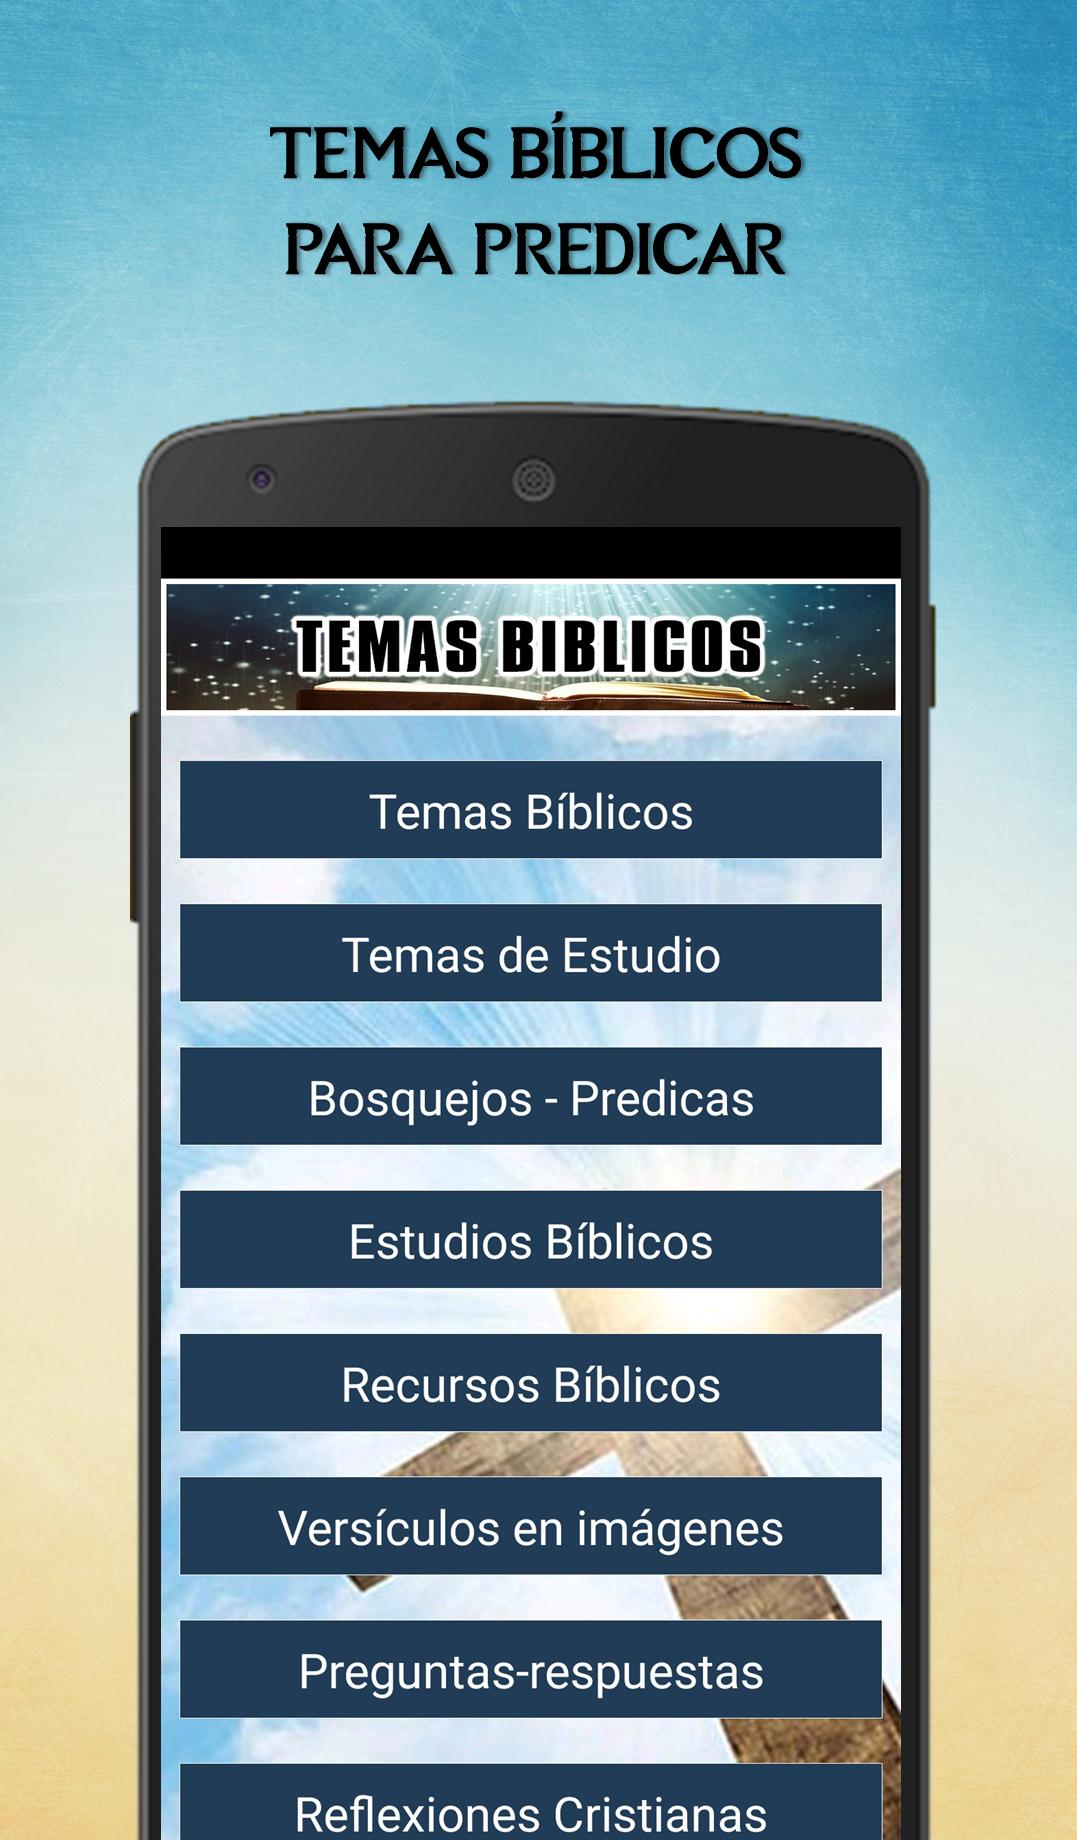 Temas Bíblicos para predicar 14.0.0 Screenshot 1